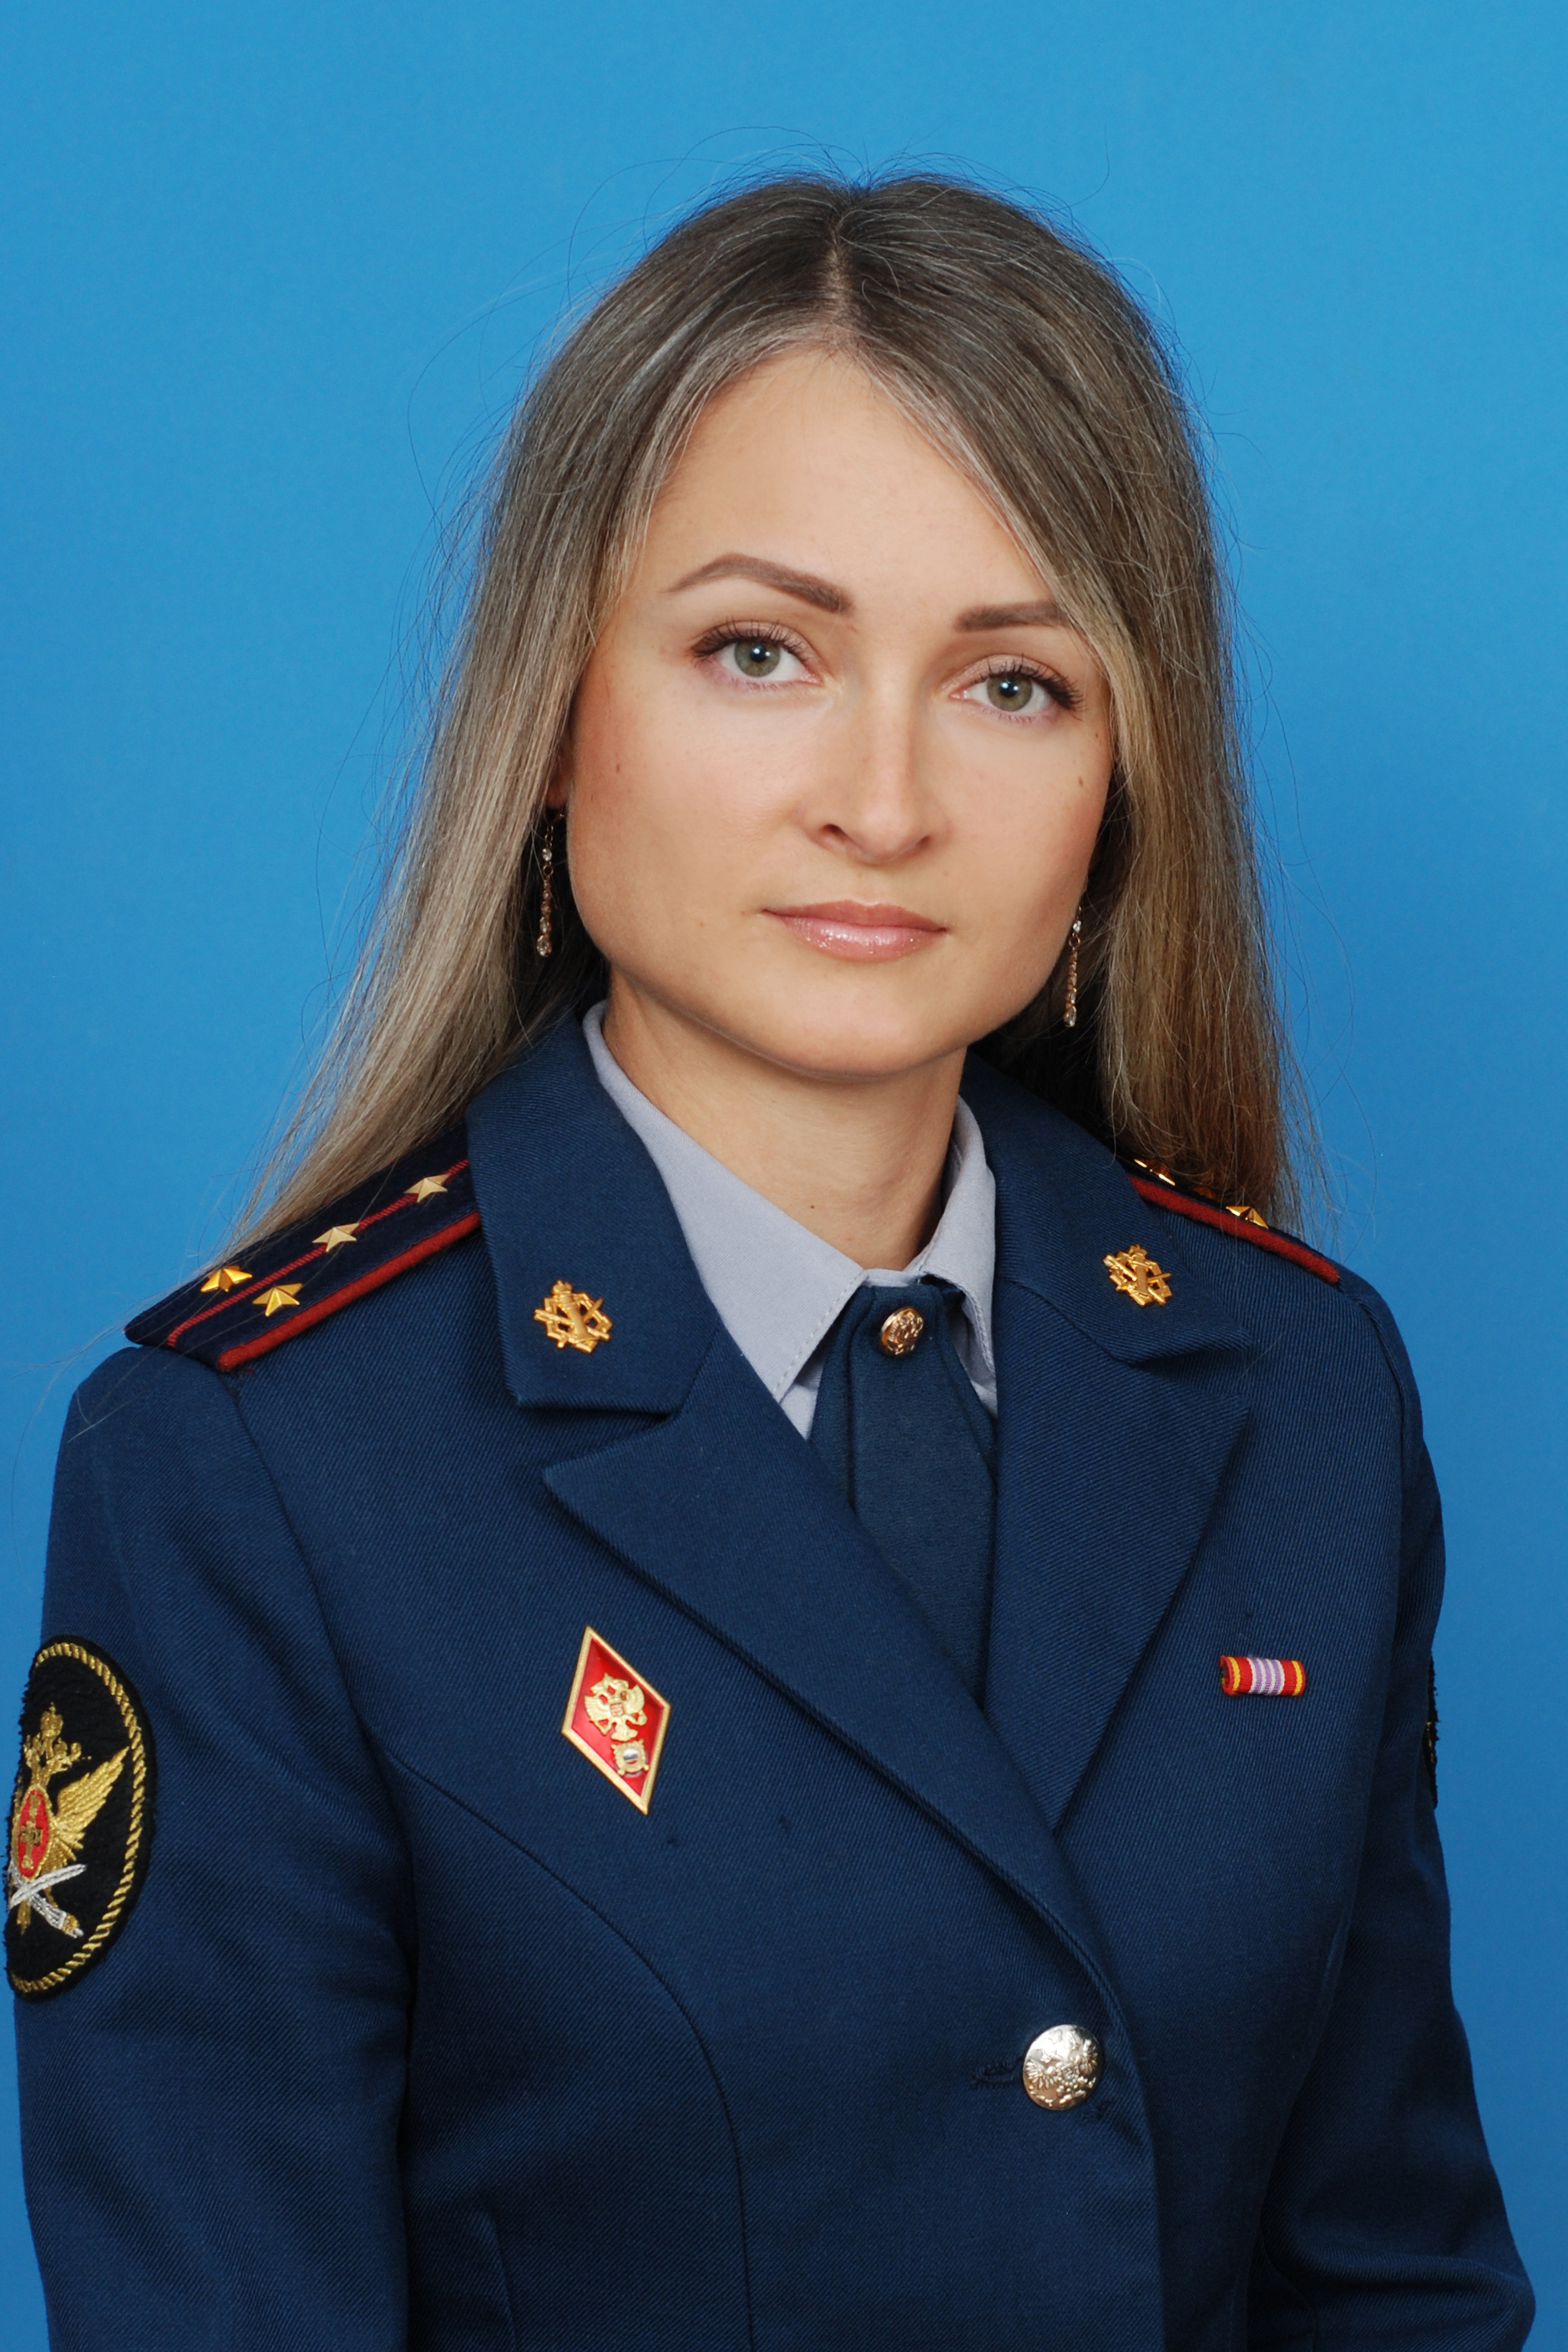                         Pashukova Anastasiya
            